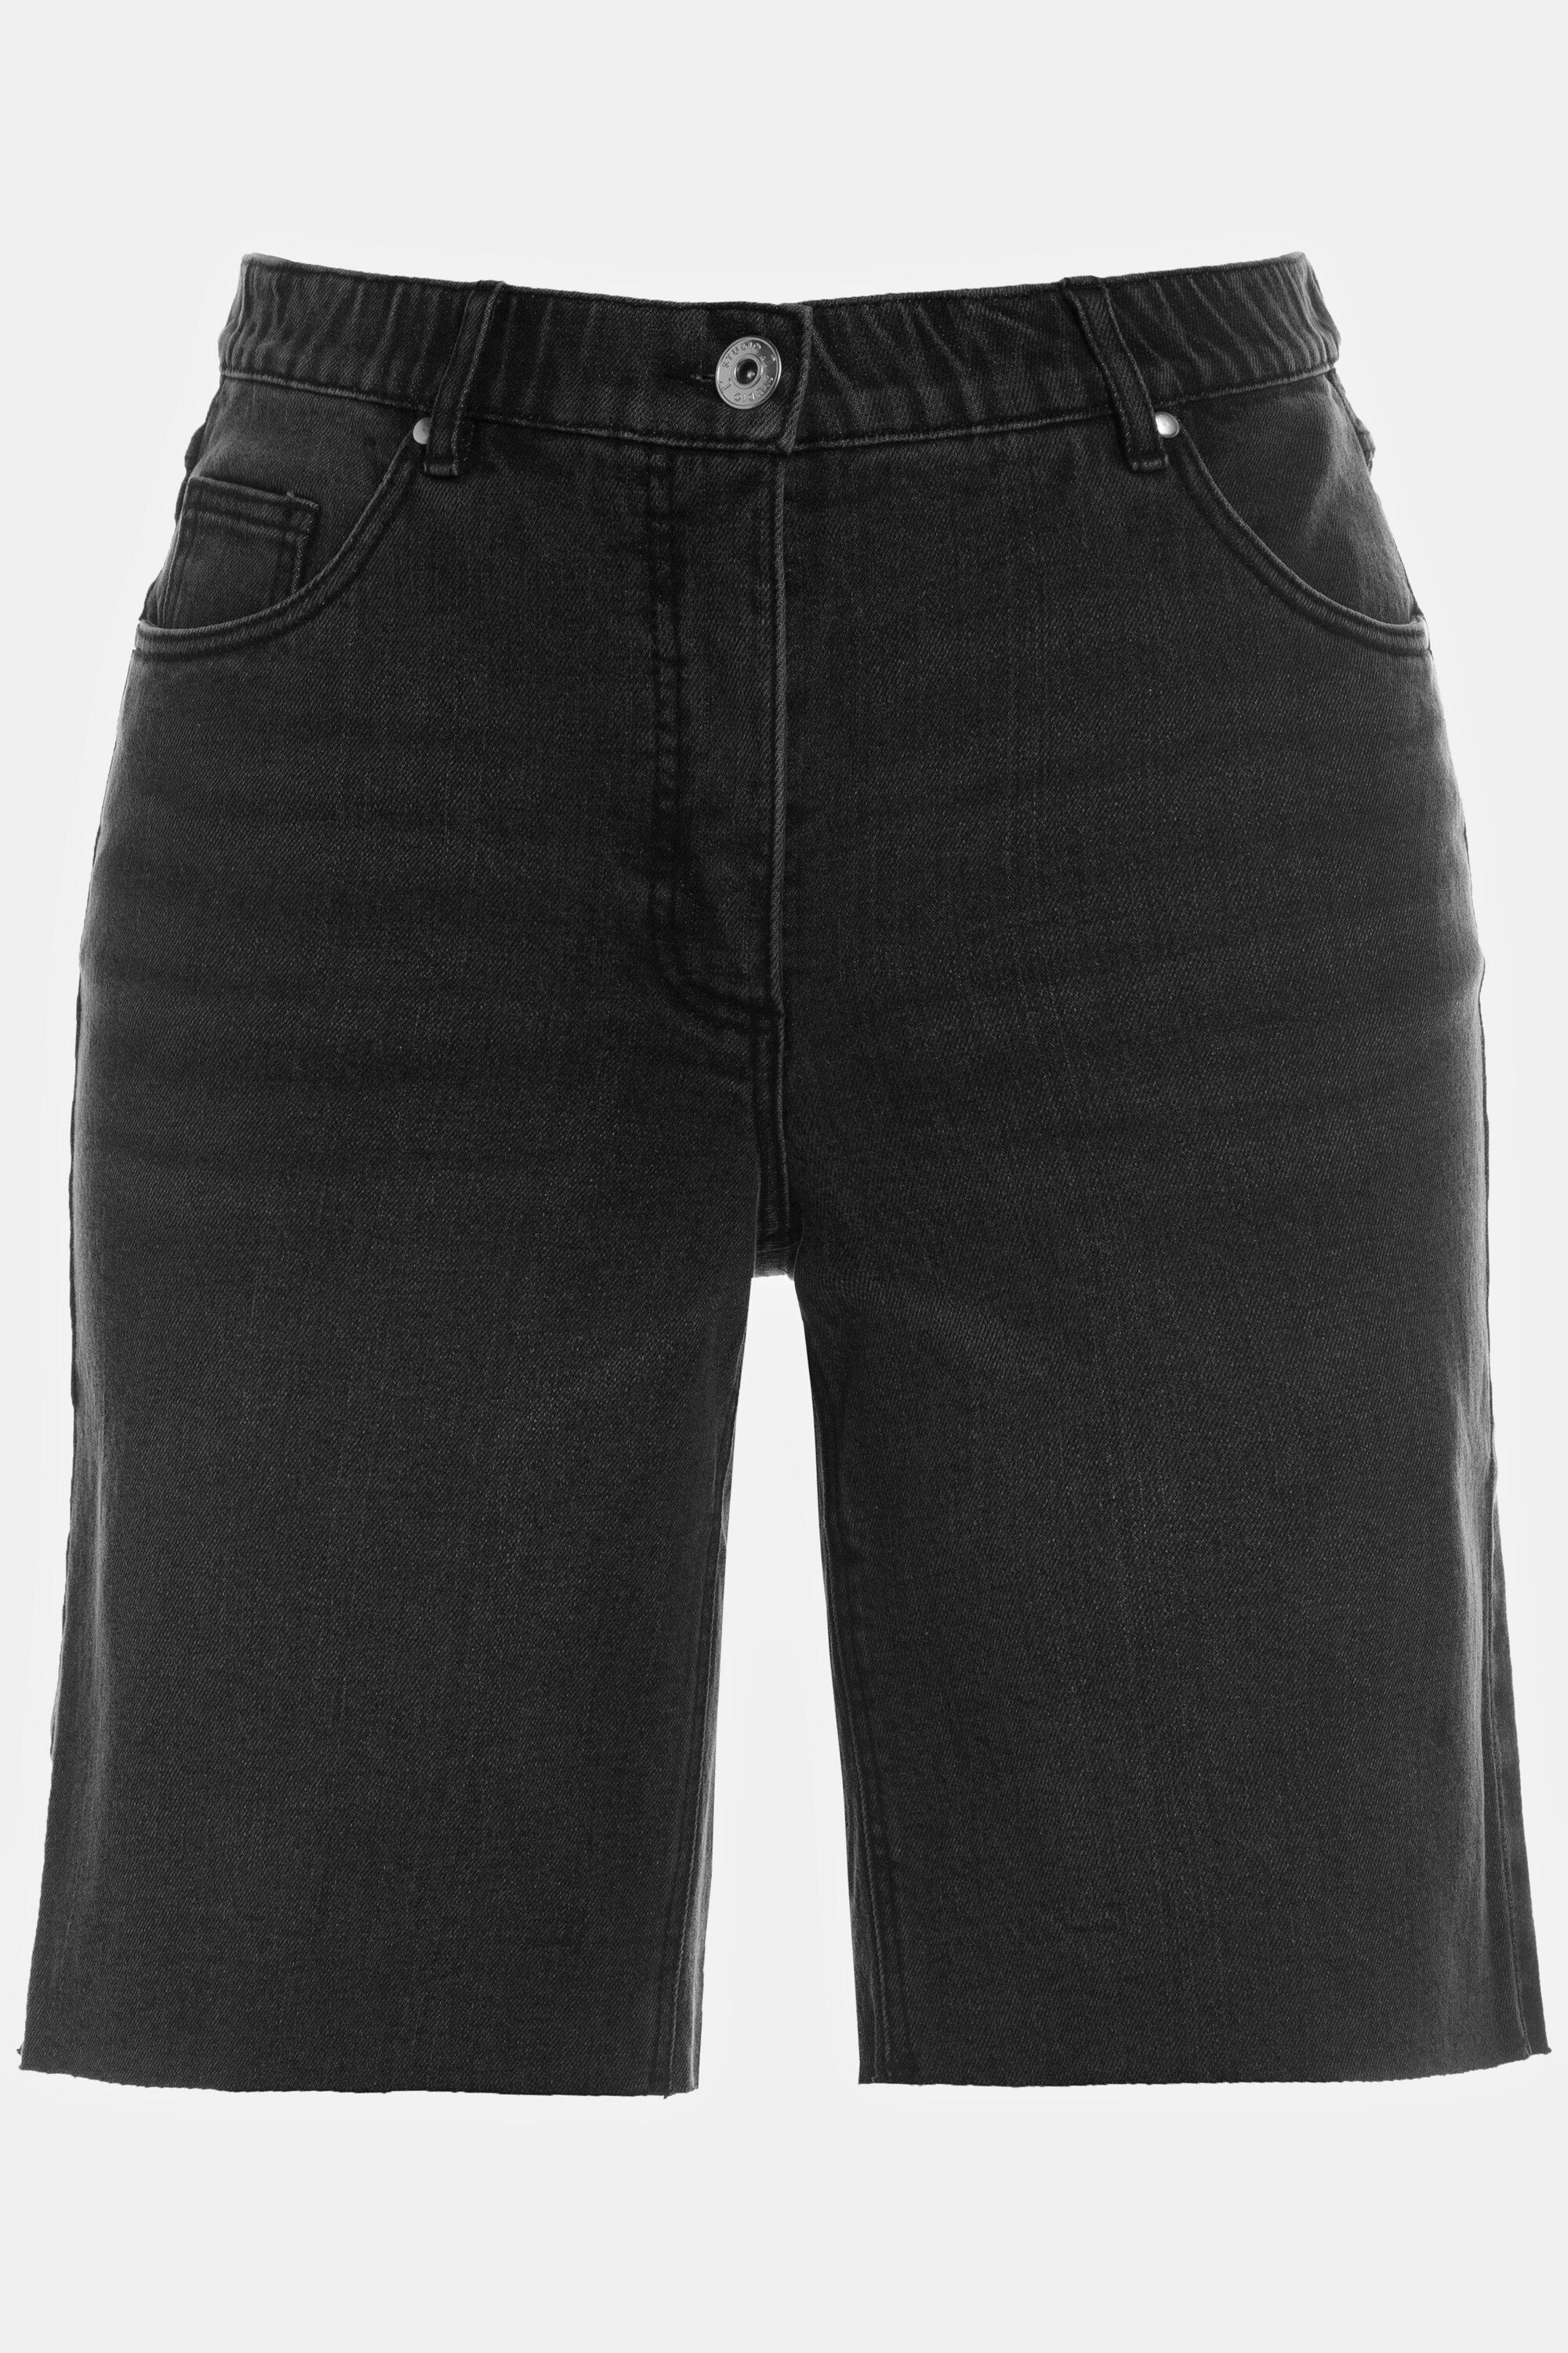 Jeansshorts black 5-Pocket High Waist Studio Jeans-Shorts Untold